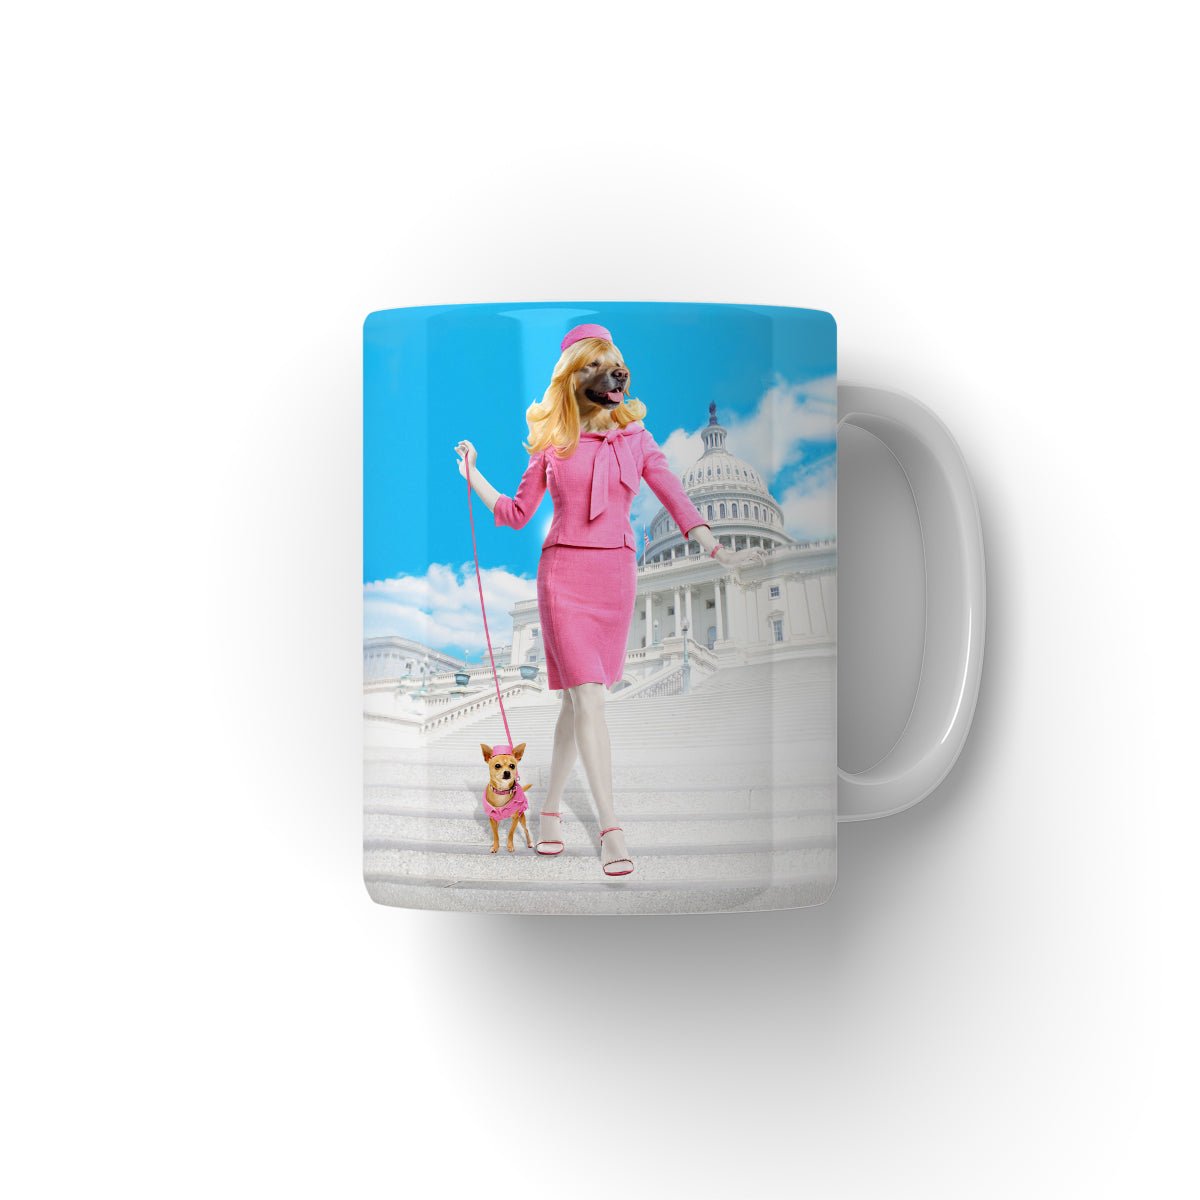 Legally Blonde: Custom Pet Mug - Paw & Glory - #pet portraits# - #dog portraits# - #pet portraits uk#paw and glory, custom pet portrait Mug,face on mug, custom mug with photo, image on mug, mug dog, coffee mug prints